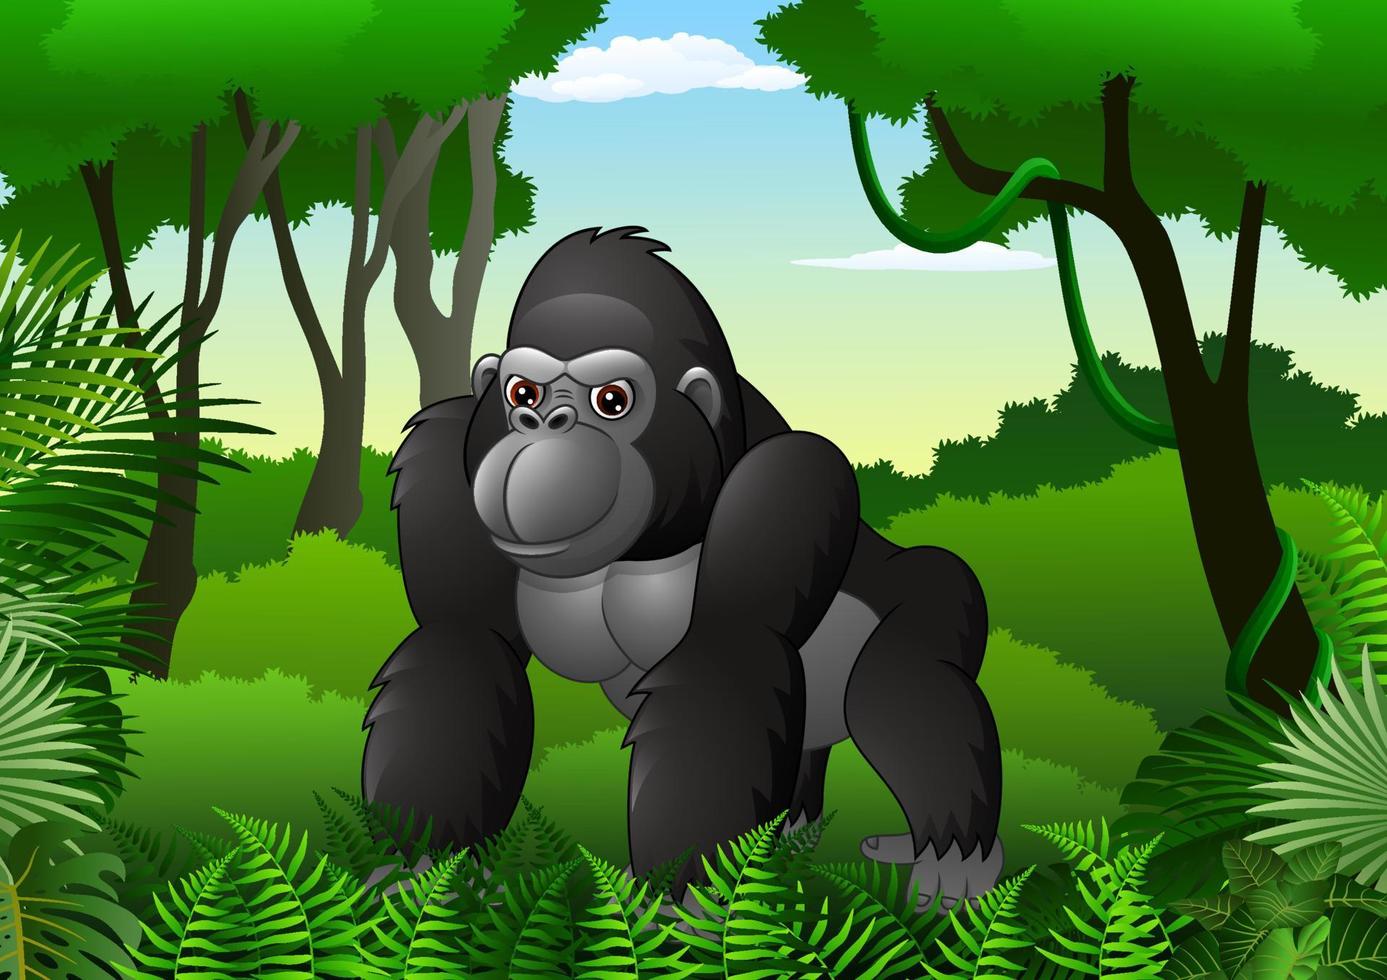 Cartoon gorilla in the thick rain forest vector